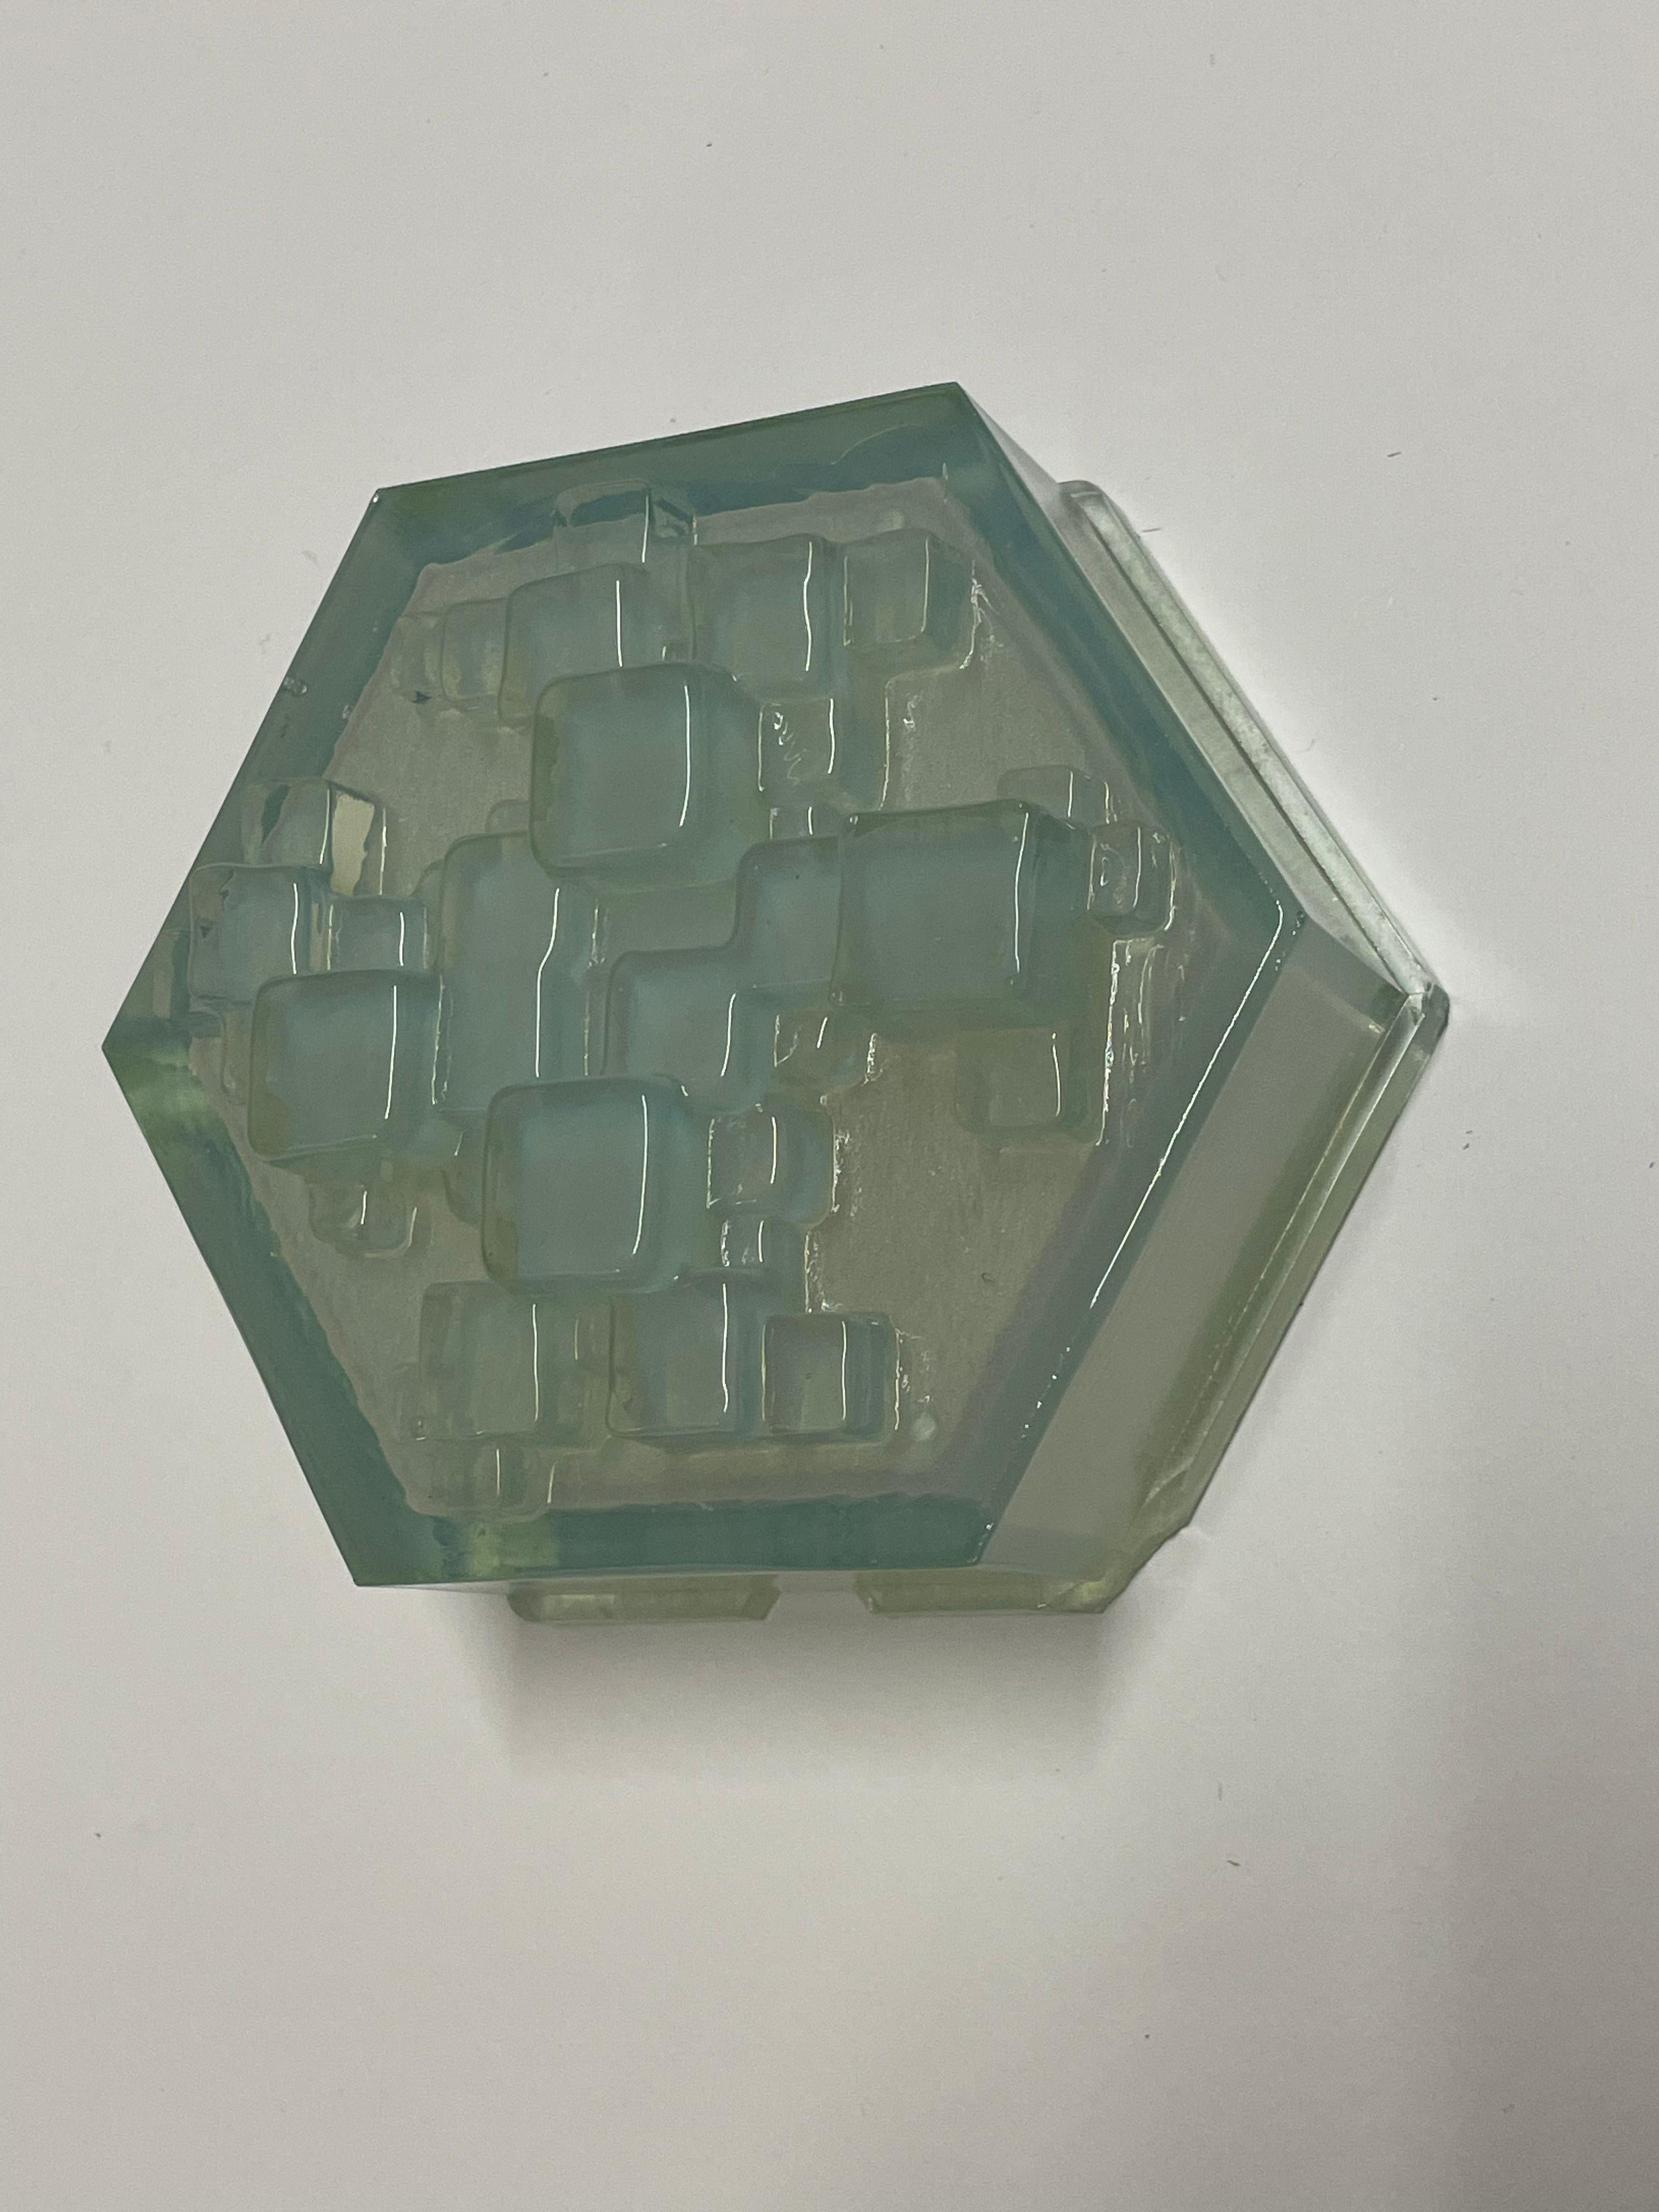 Hexagonal Modular Sconces / Flush Mounts by Poliarte - 4 available For Sale 3